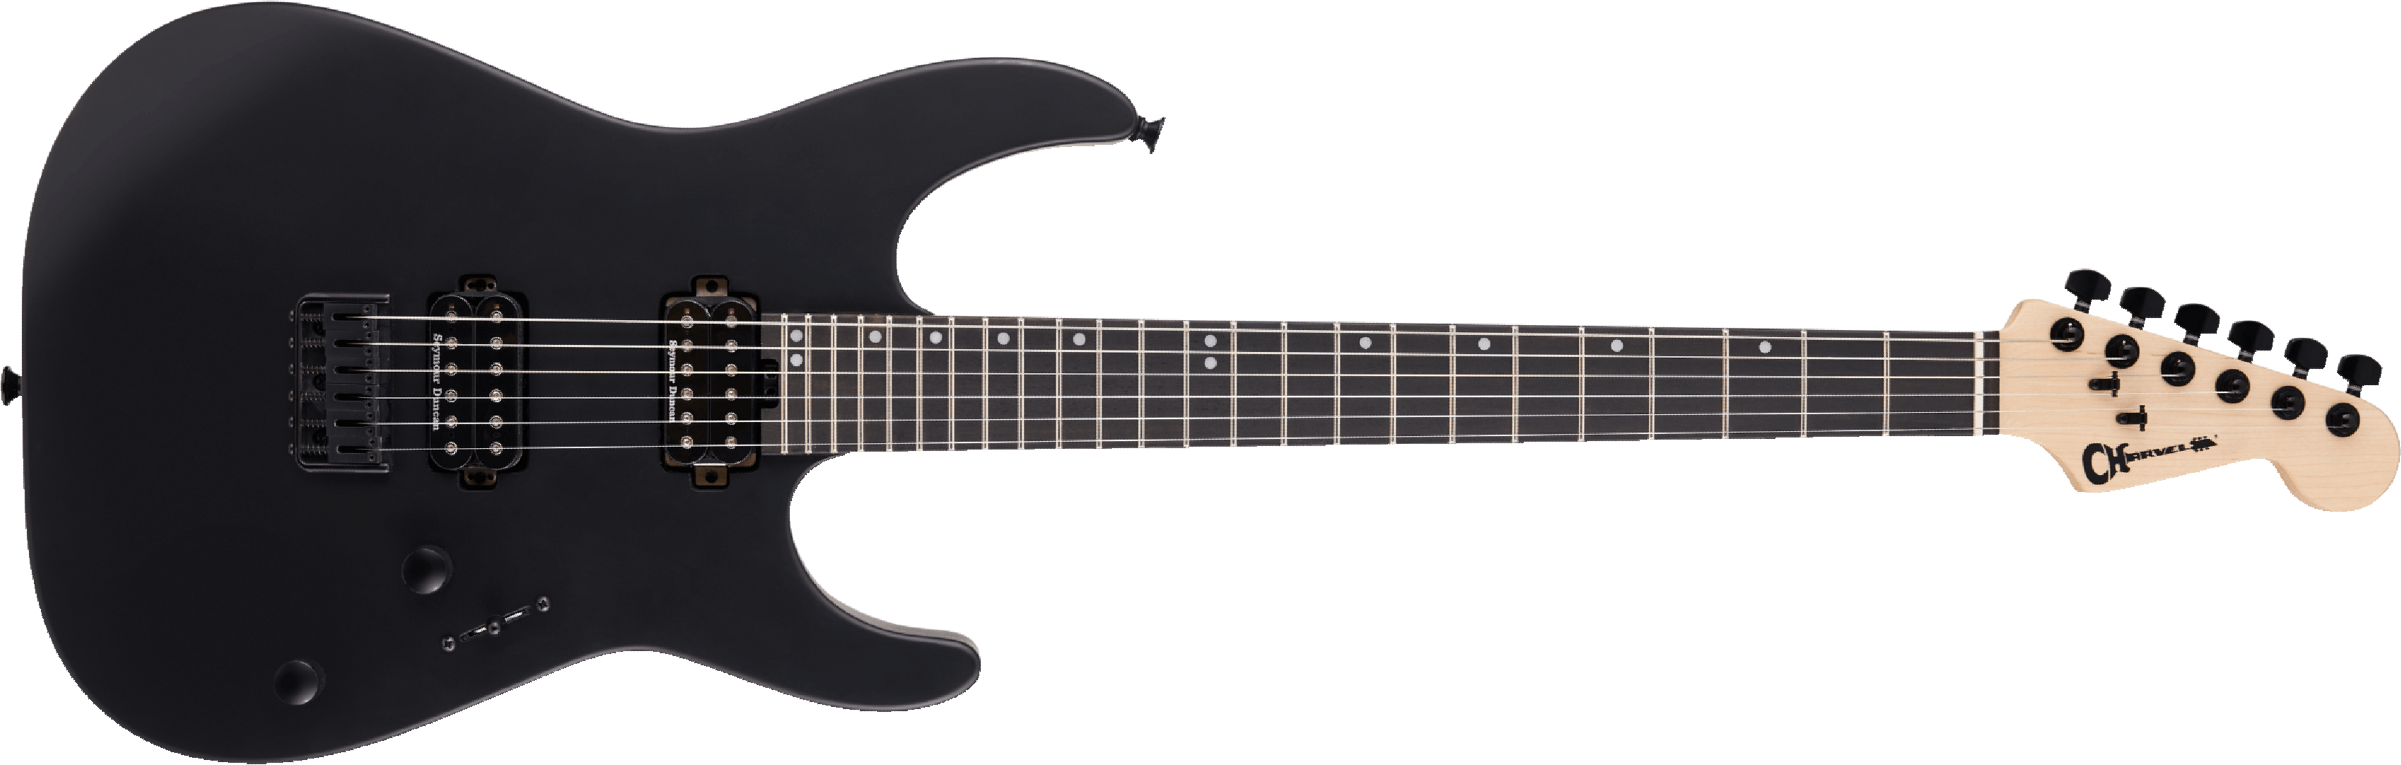 Charvel Dinky Dk24 Hh Ht E Pro-mod 2h Seymour Duncan Eb - Satin Black - Str shape electric guitar - Main picture